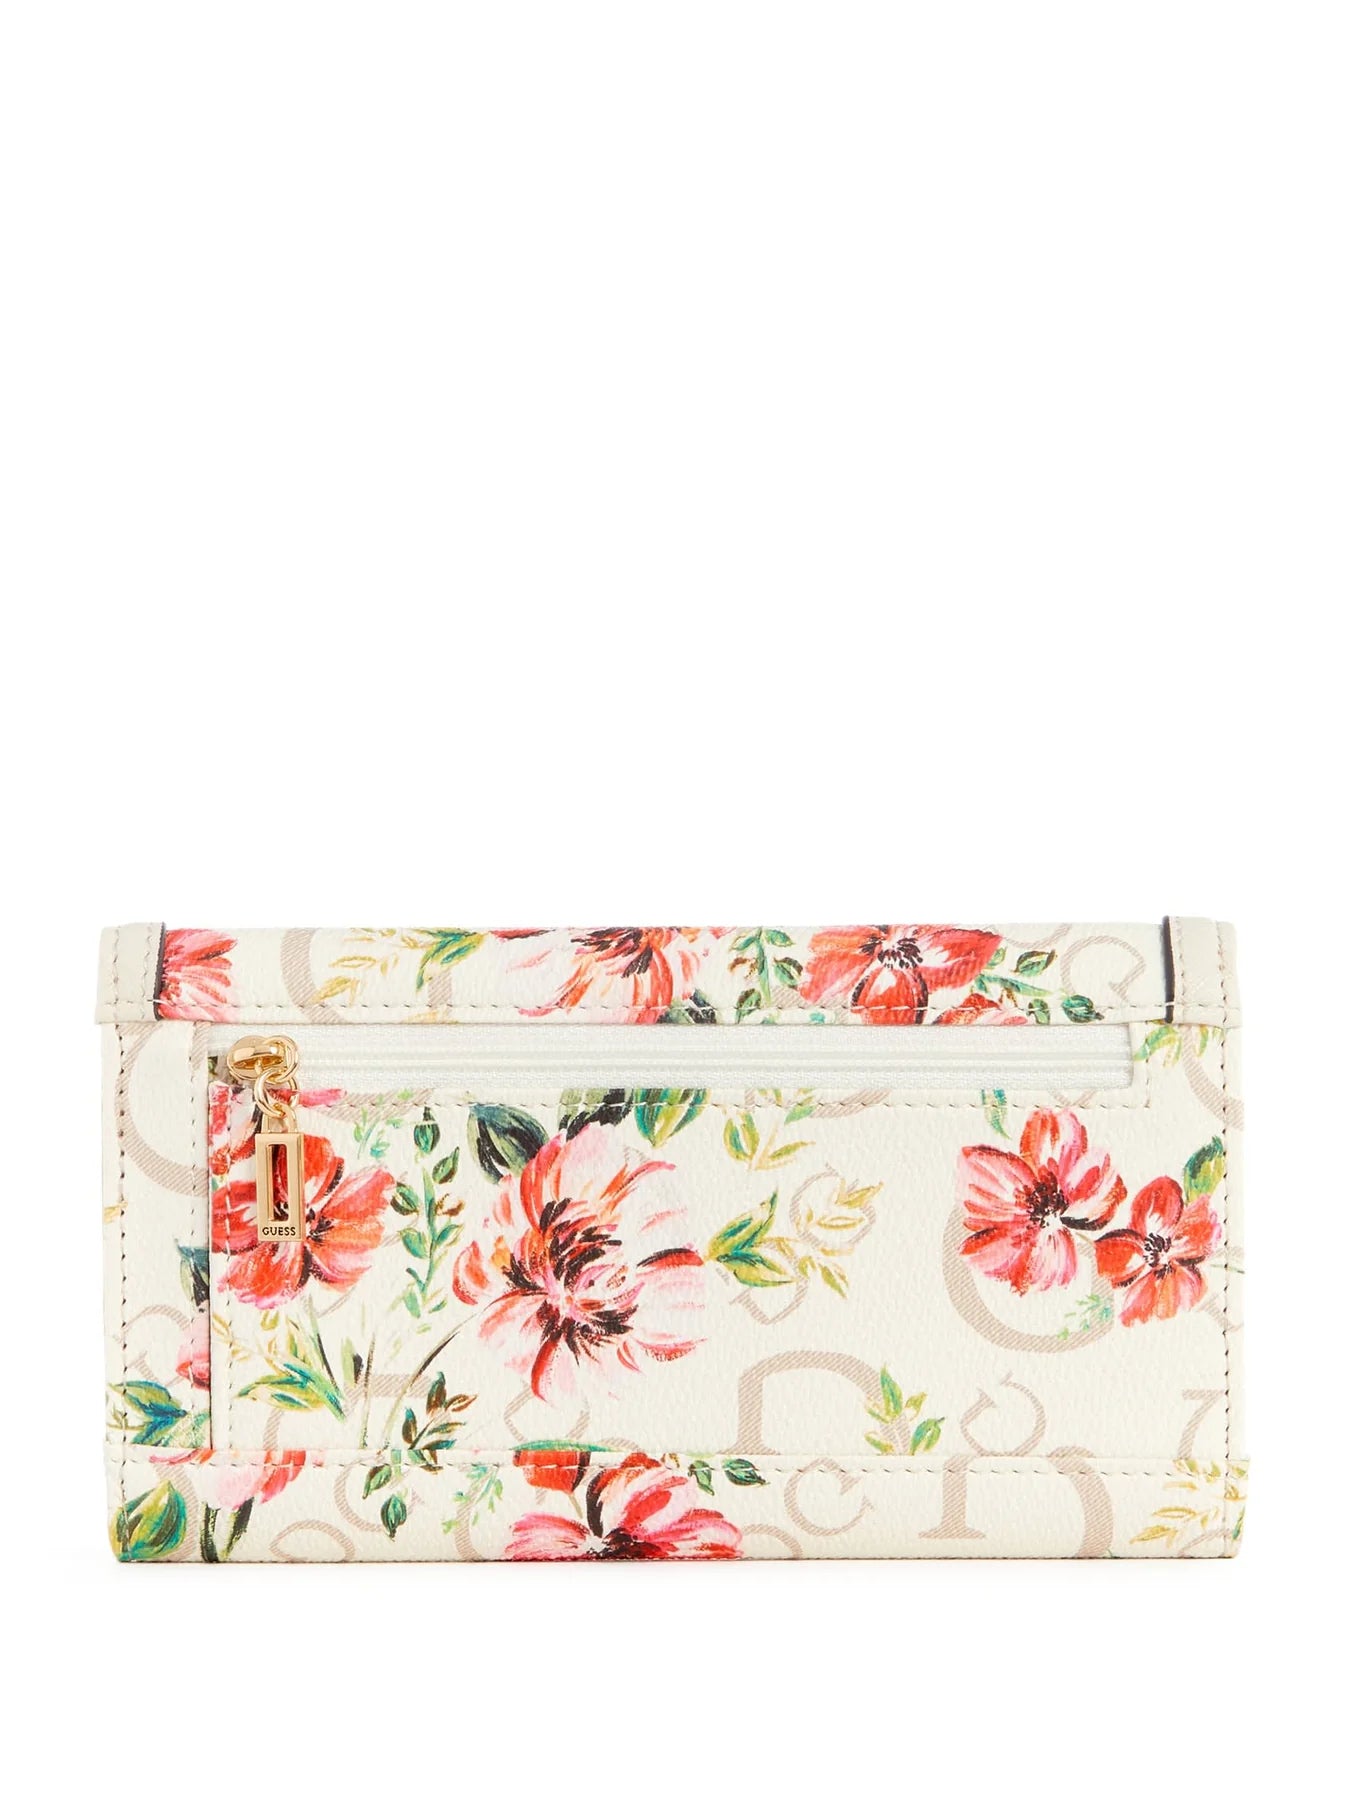 GUESS Daxton Floral Slim Clutch Wallet- Floral Multi